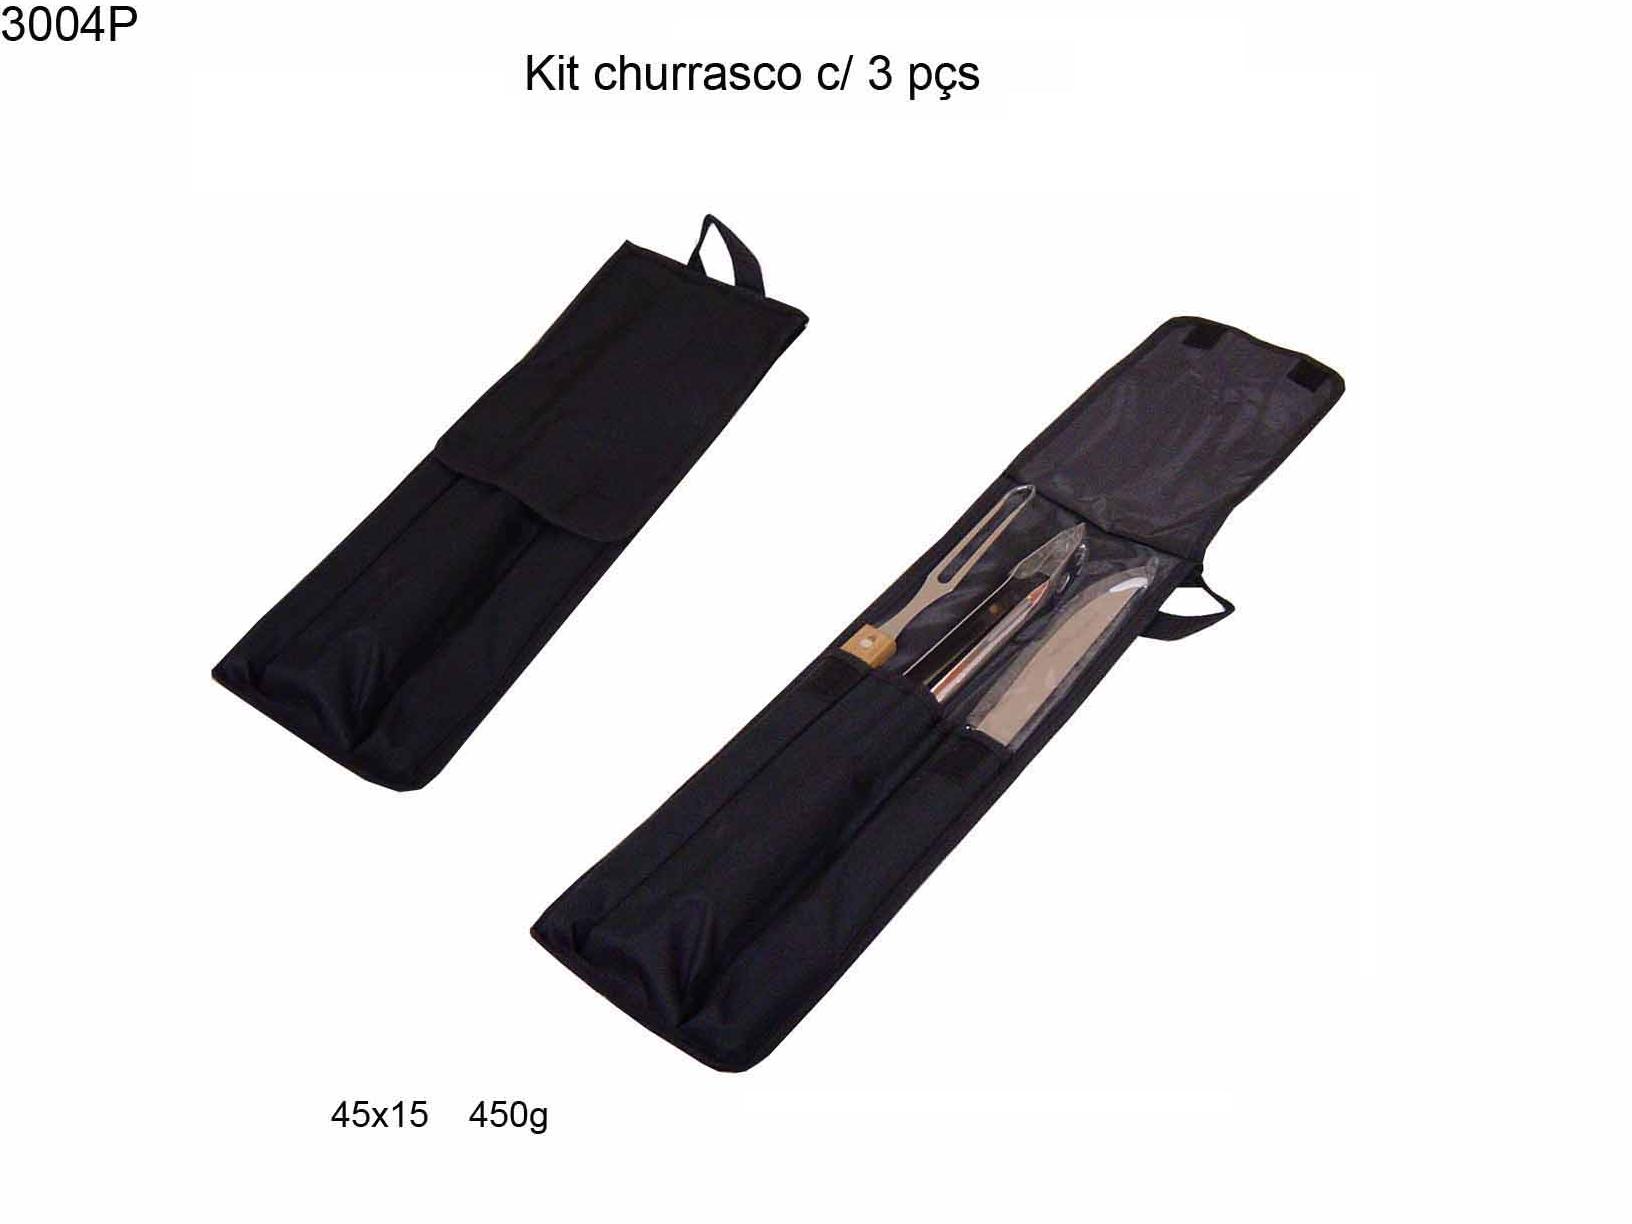 Kit talheres p/ churrasco c/ 3 pçs (3004P)